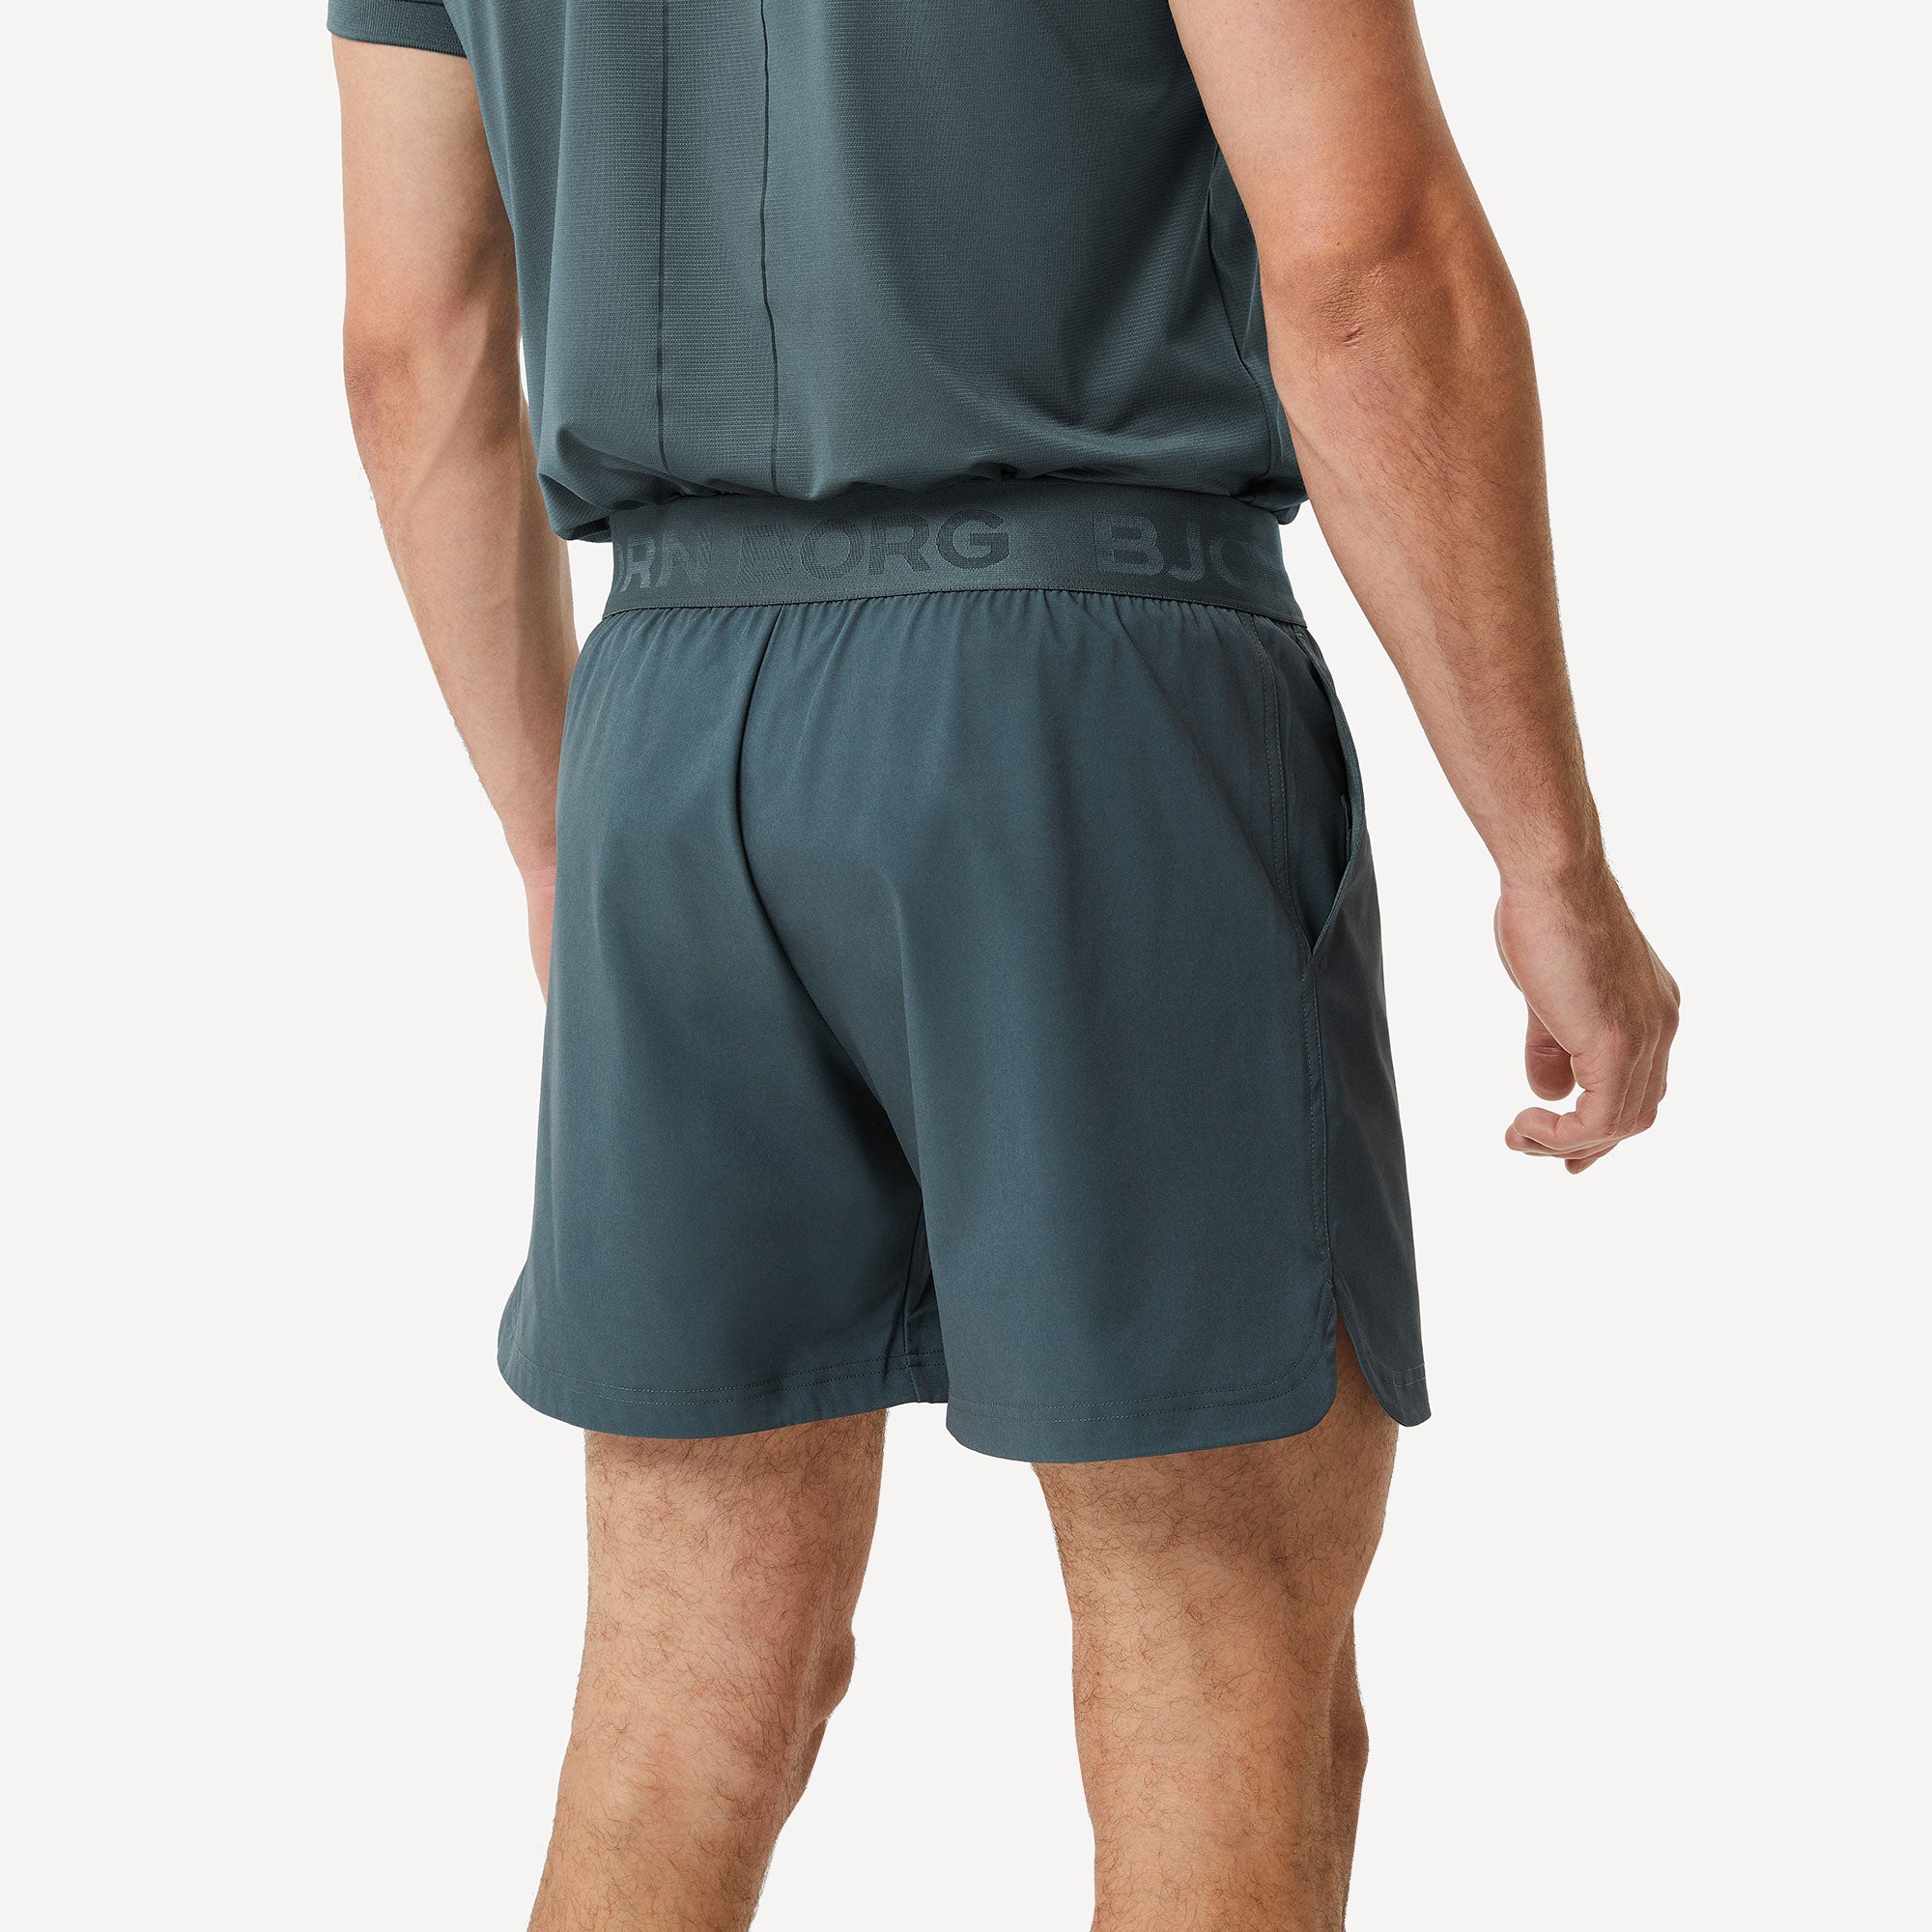 Björn Borg Ace Men's Short Tennis Shorts - Green (2)